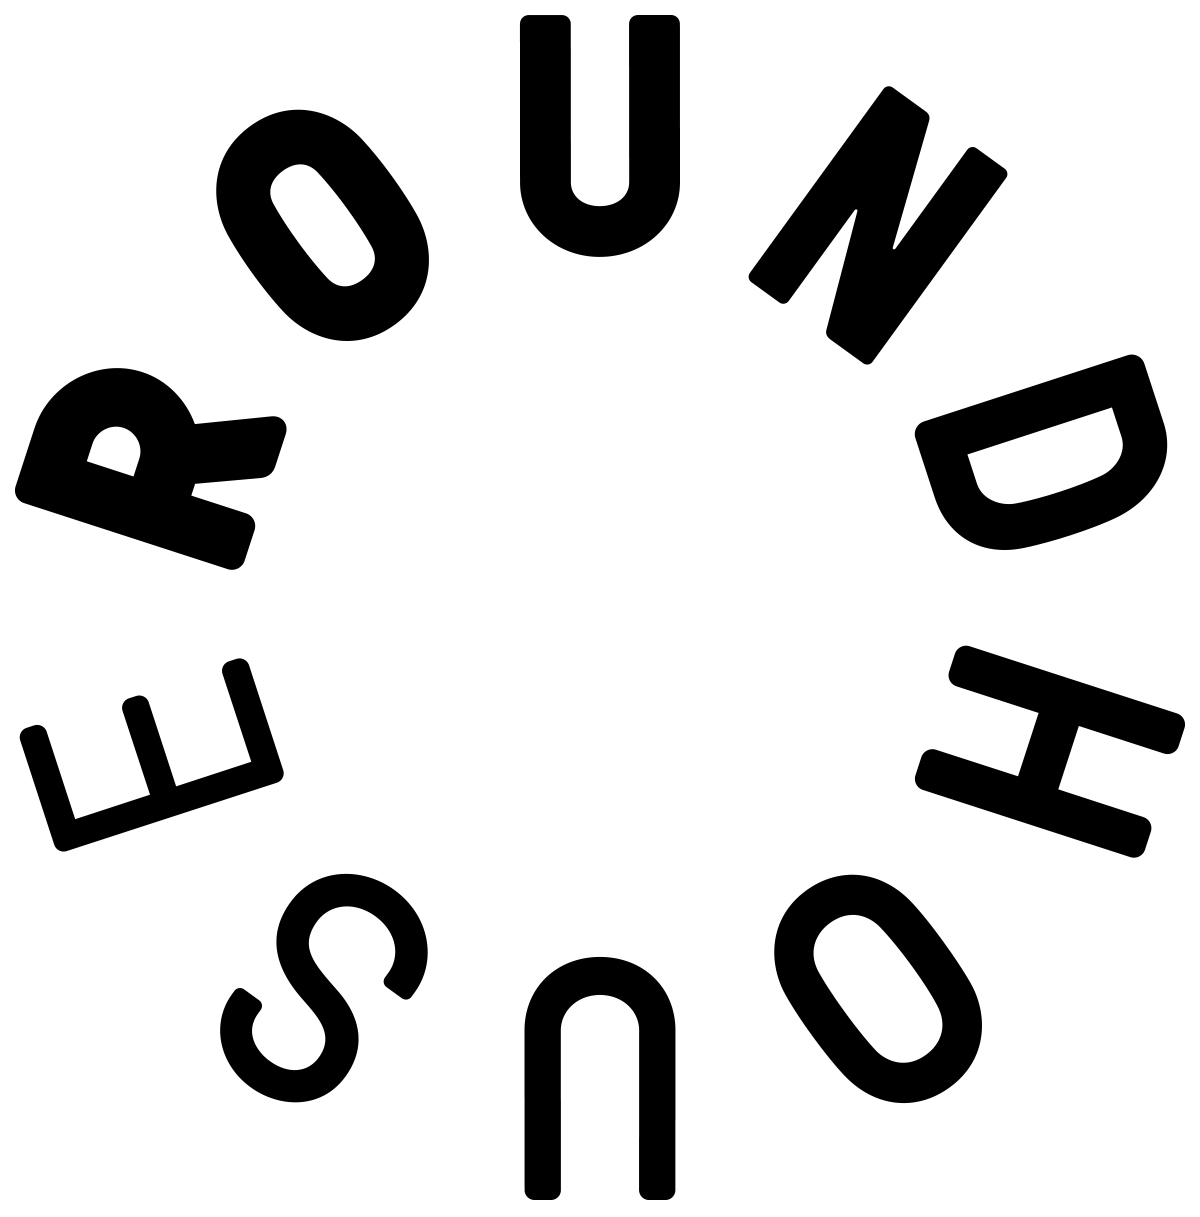 Roundhouse logo 2021